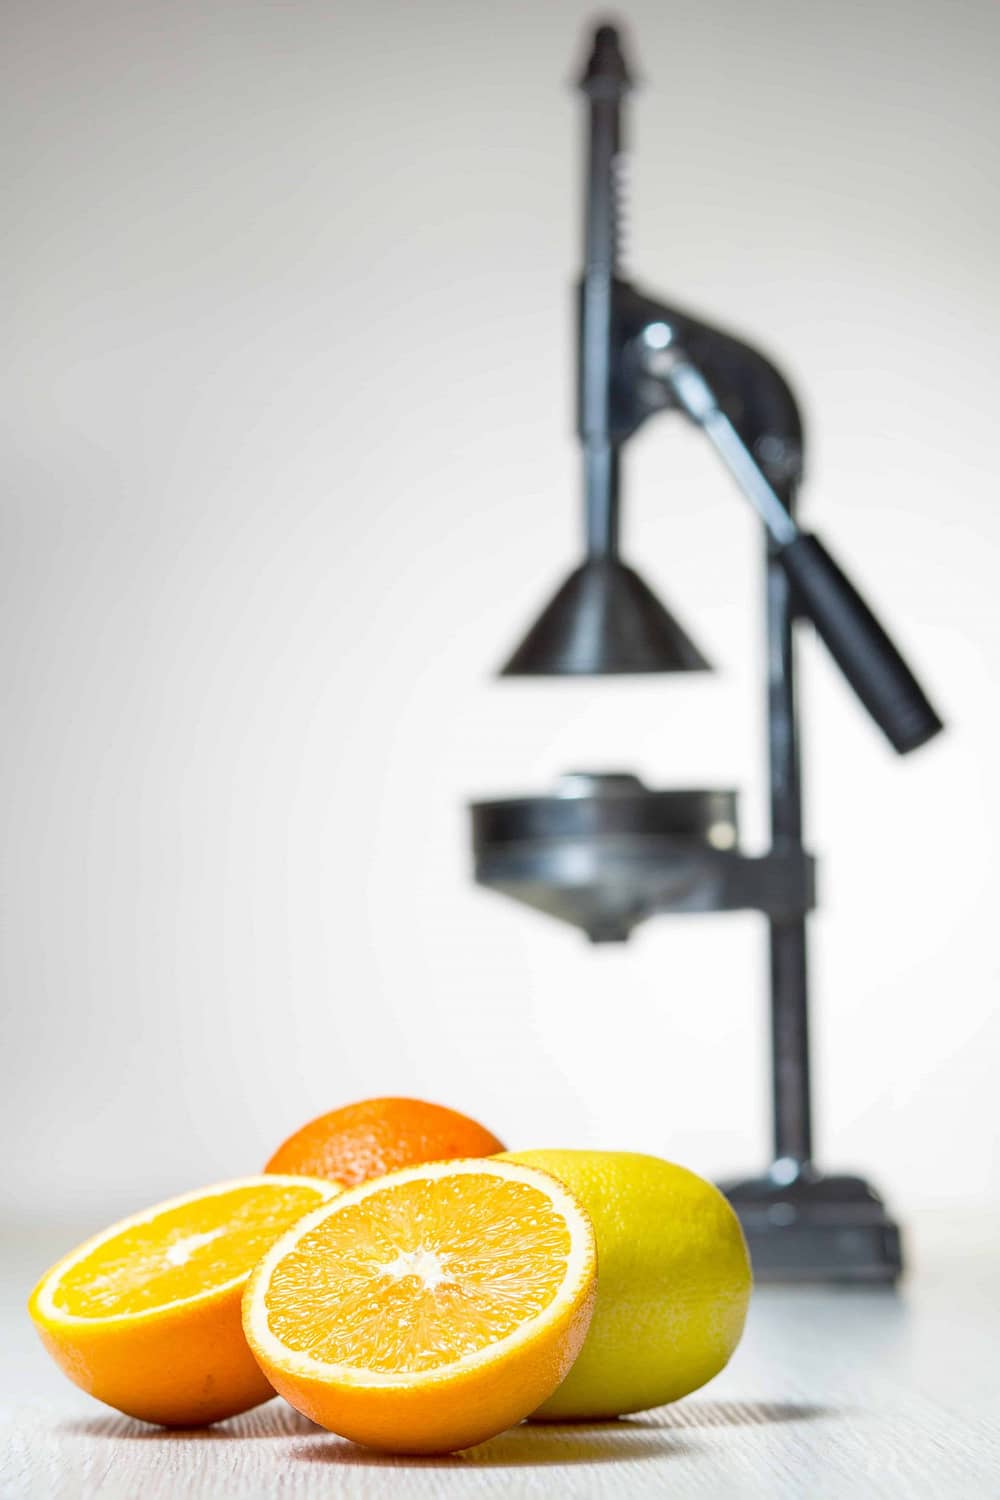 Commercial Citrus juicer with oranges